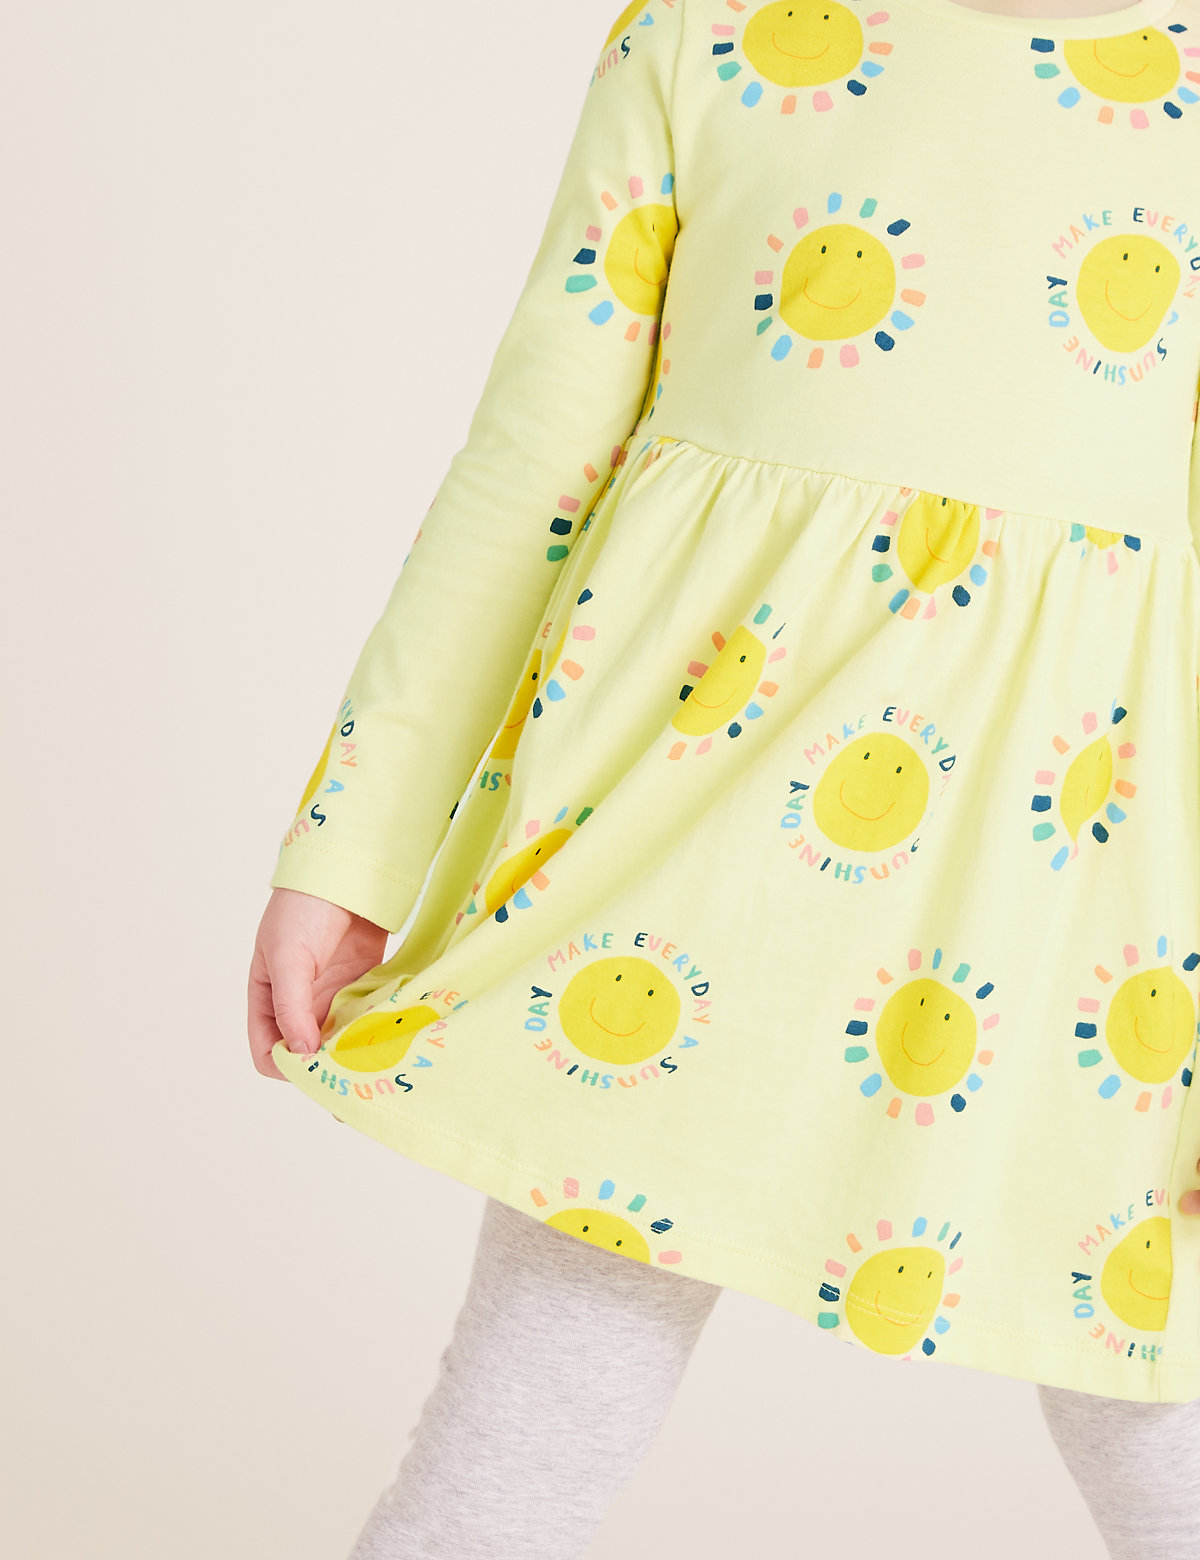 Pure Cotton Sunshine Print Dress